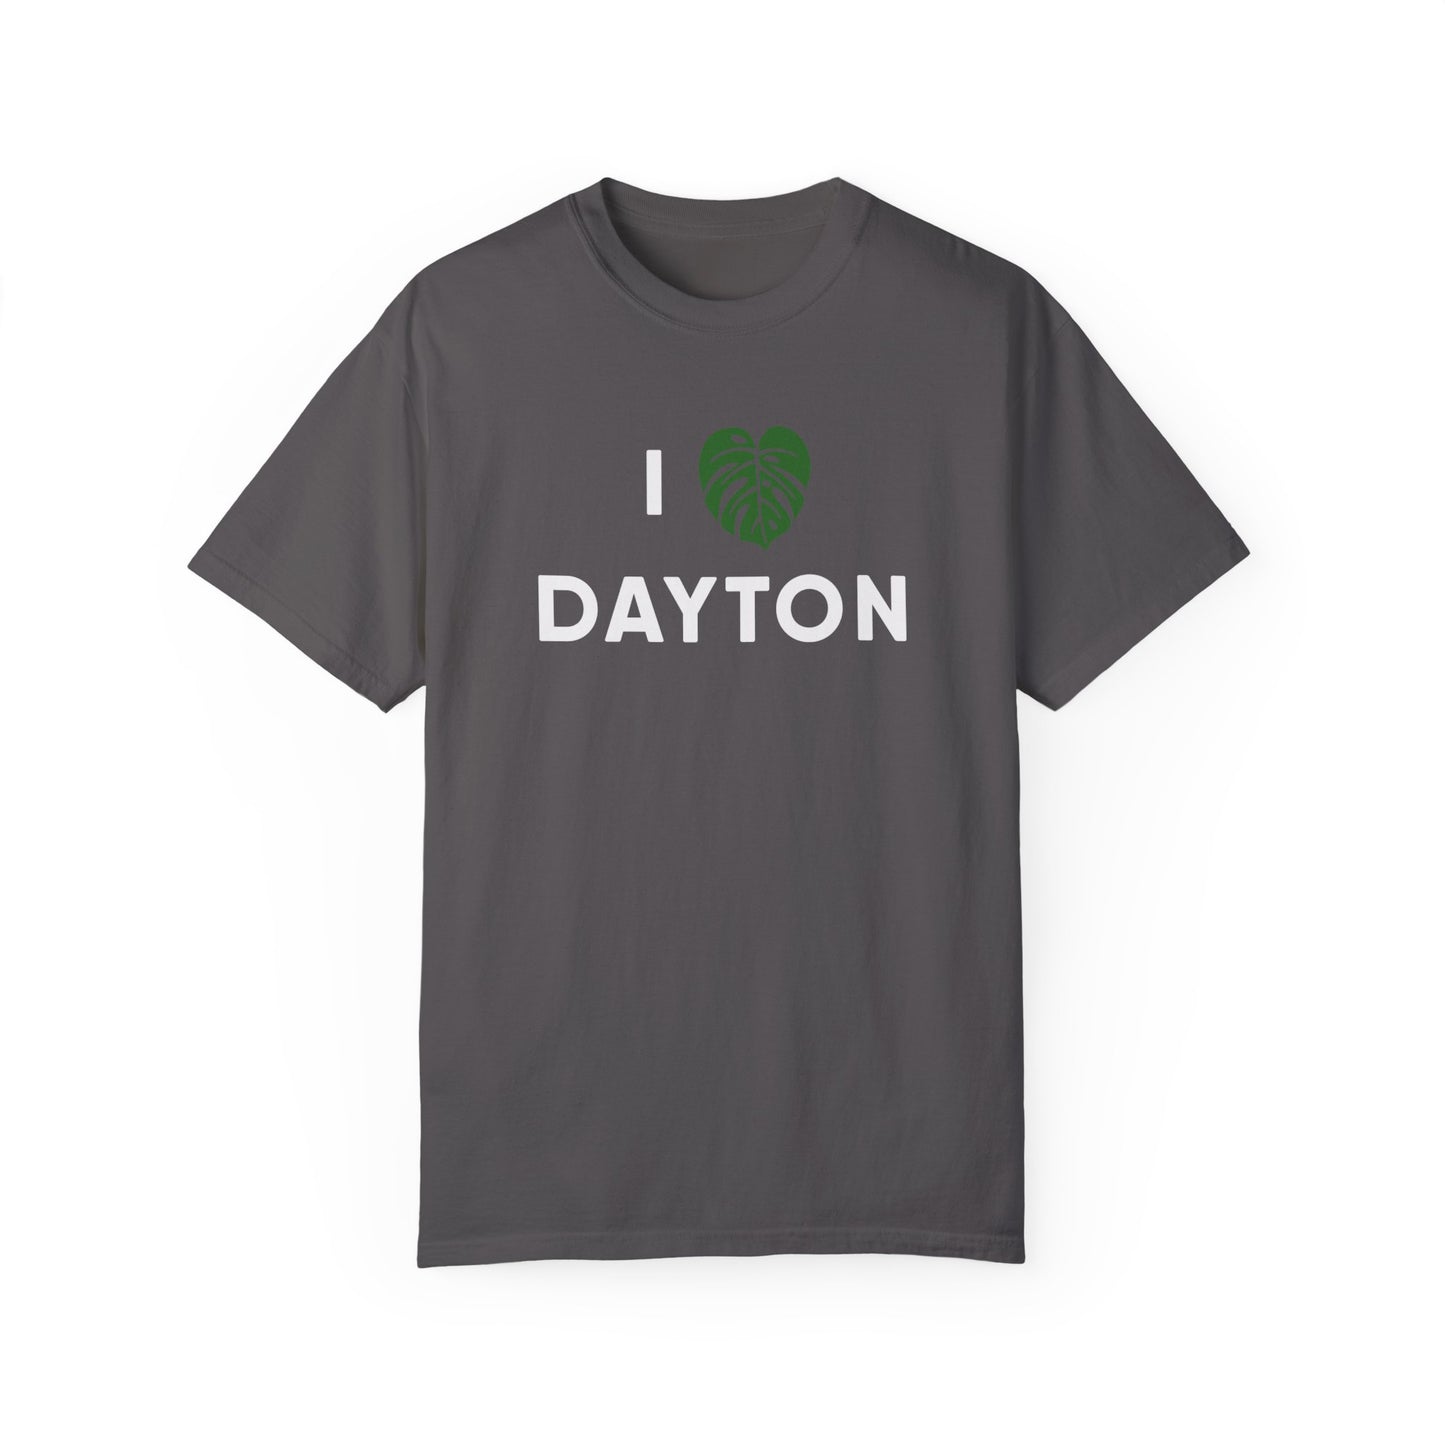 I Leaf Dayton - Soft Cotton Tee